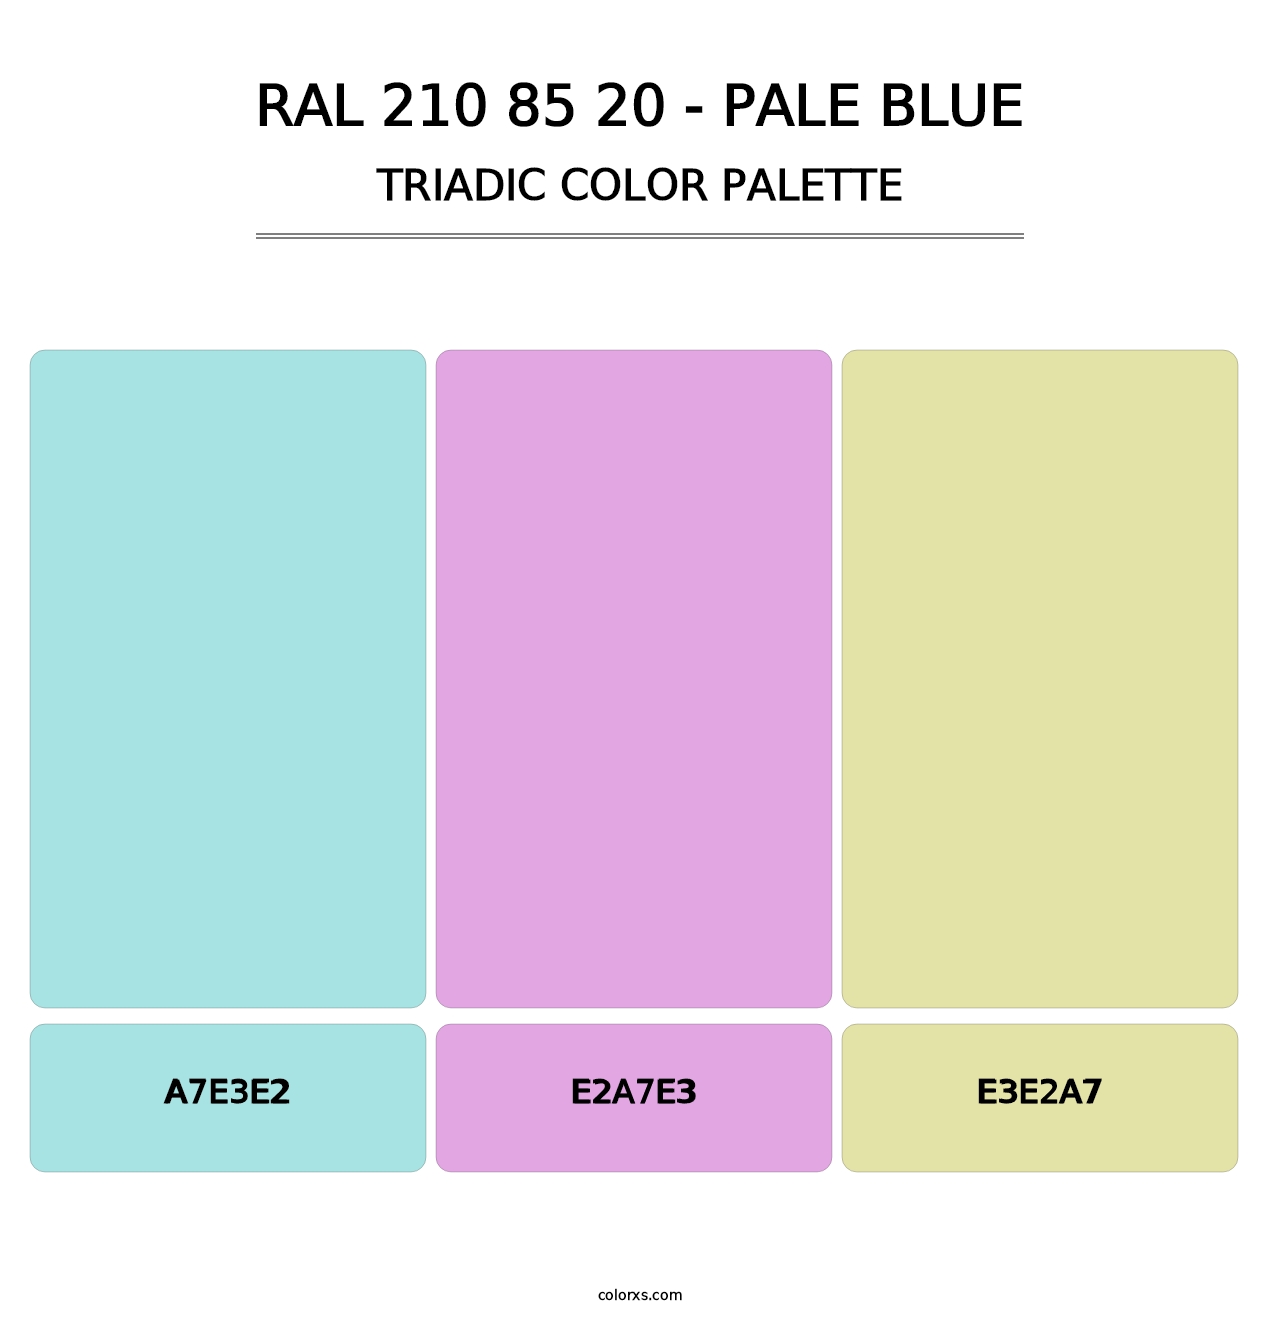 RAL 210 85 20 - Pale Blue - Triadic Color Palette